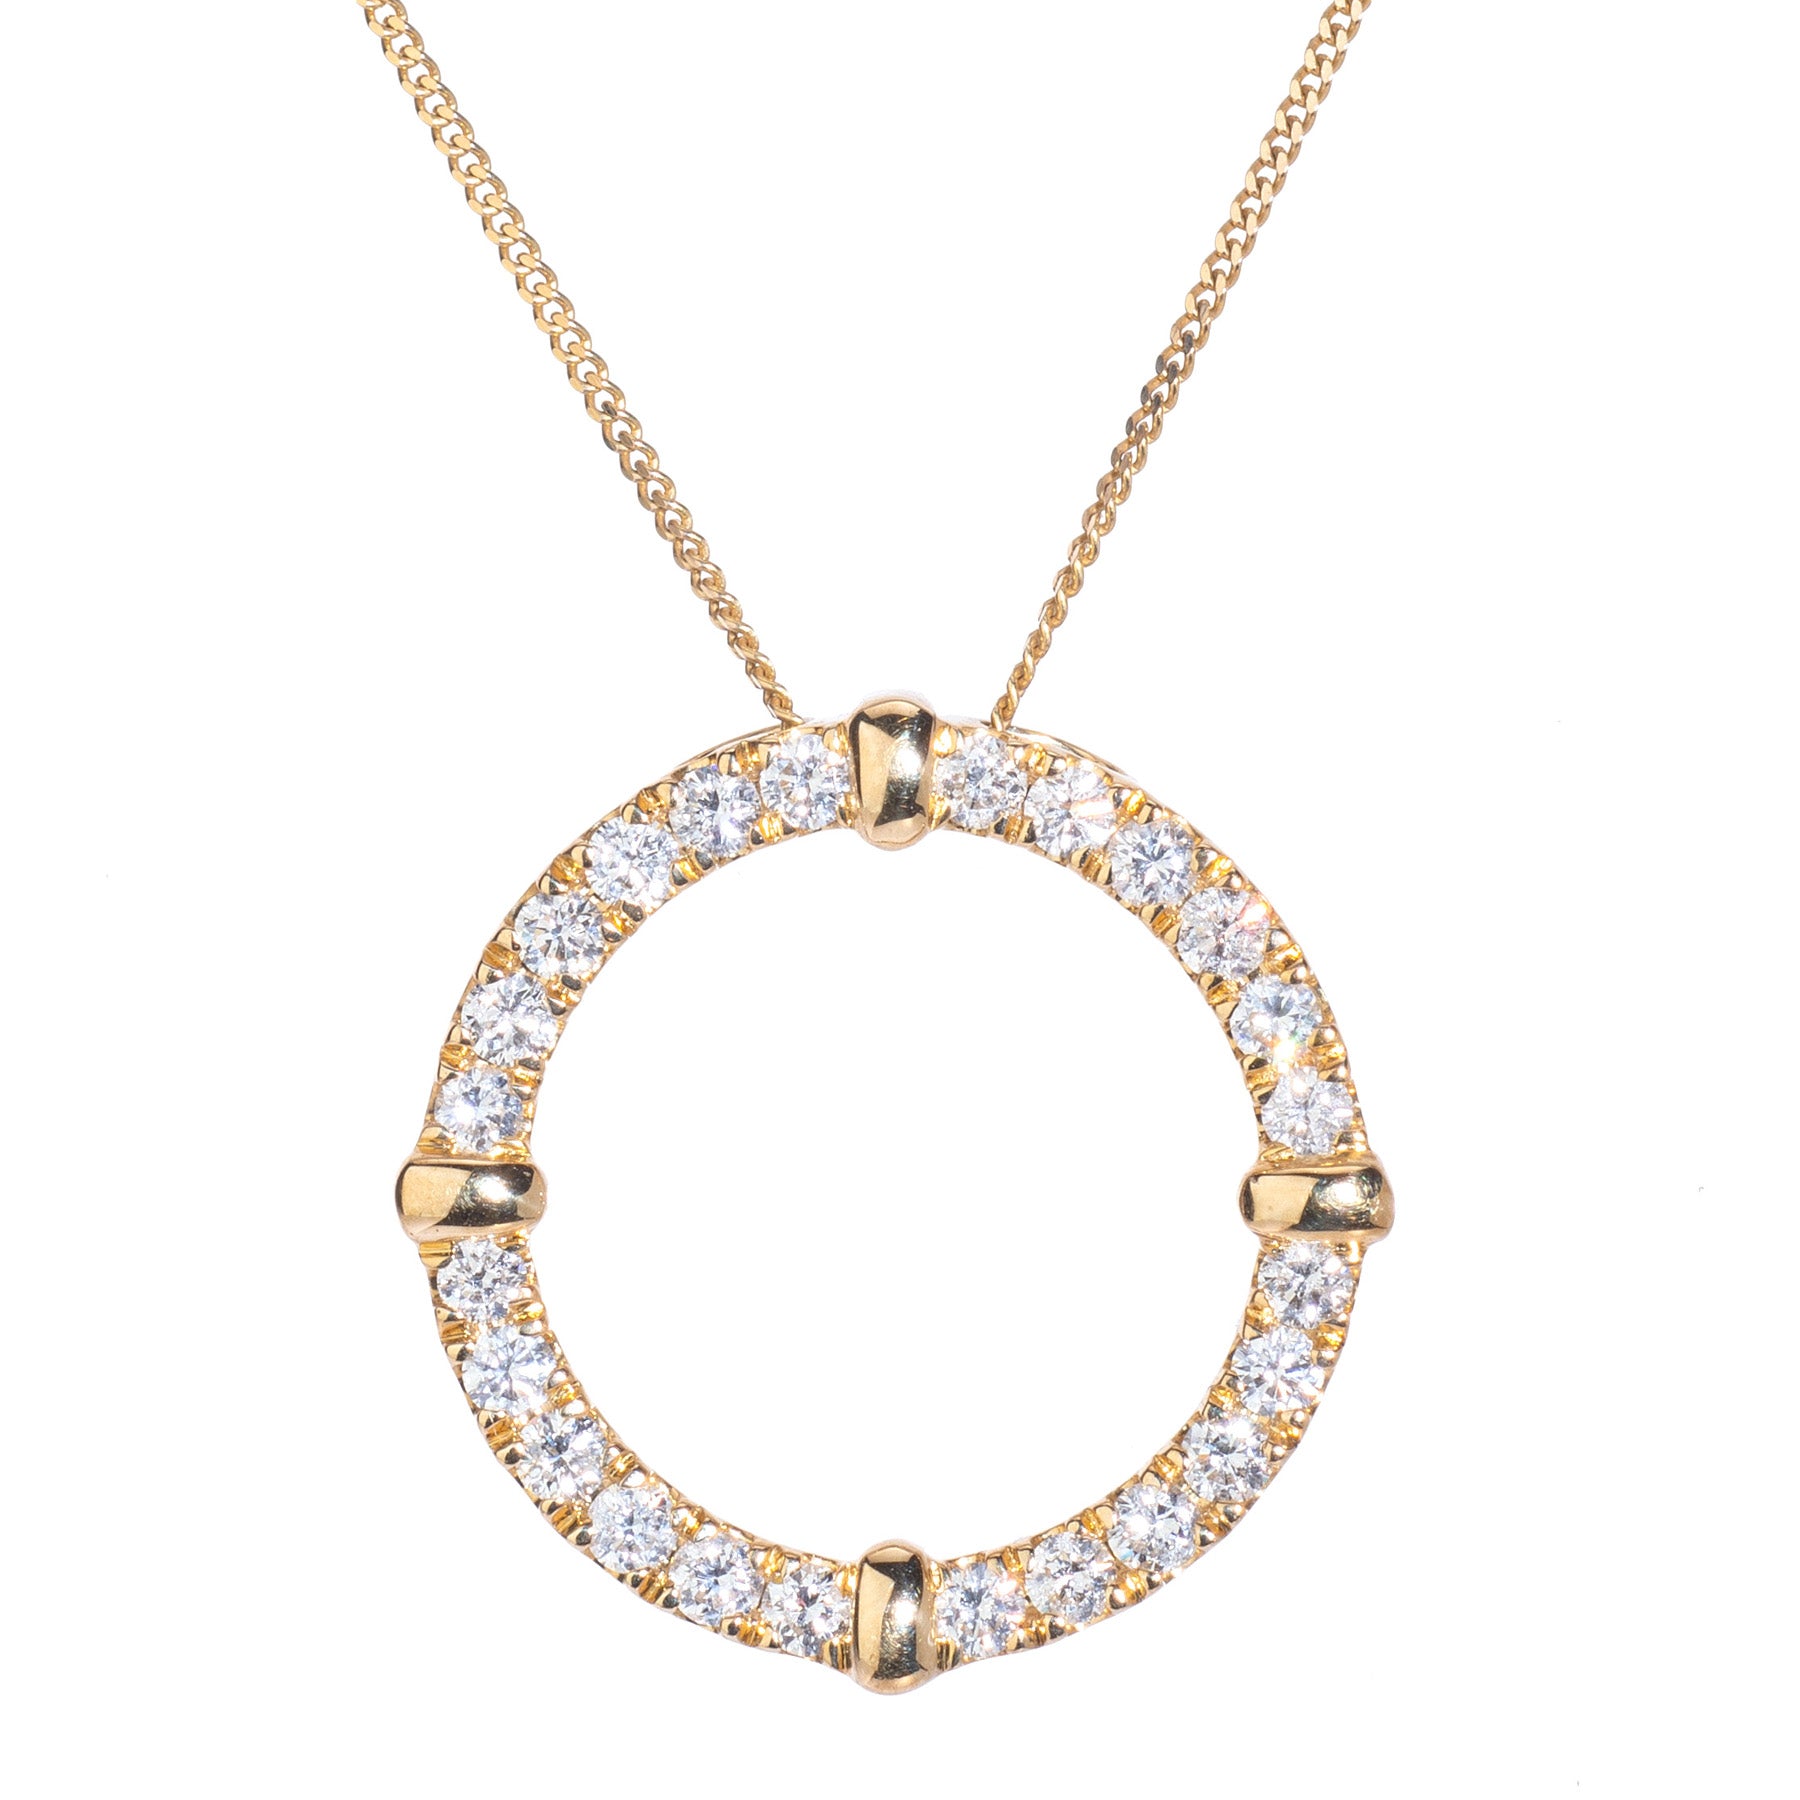 Circle of life pendant diamond set yellow gold necklace Harrogate jewellery Fogal and barnes 